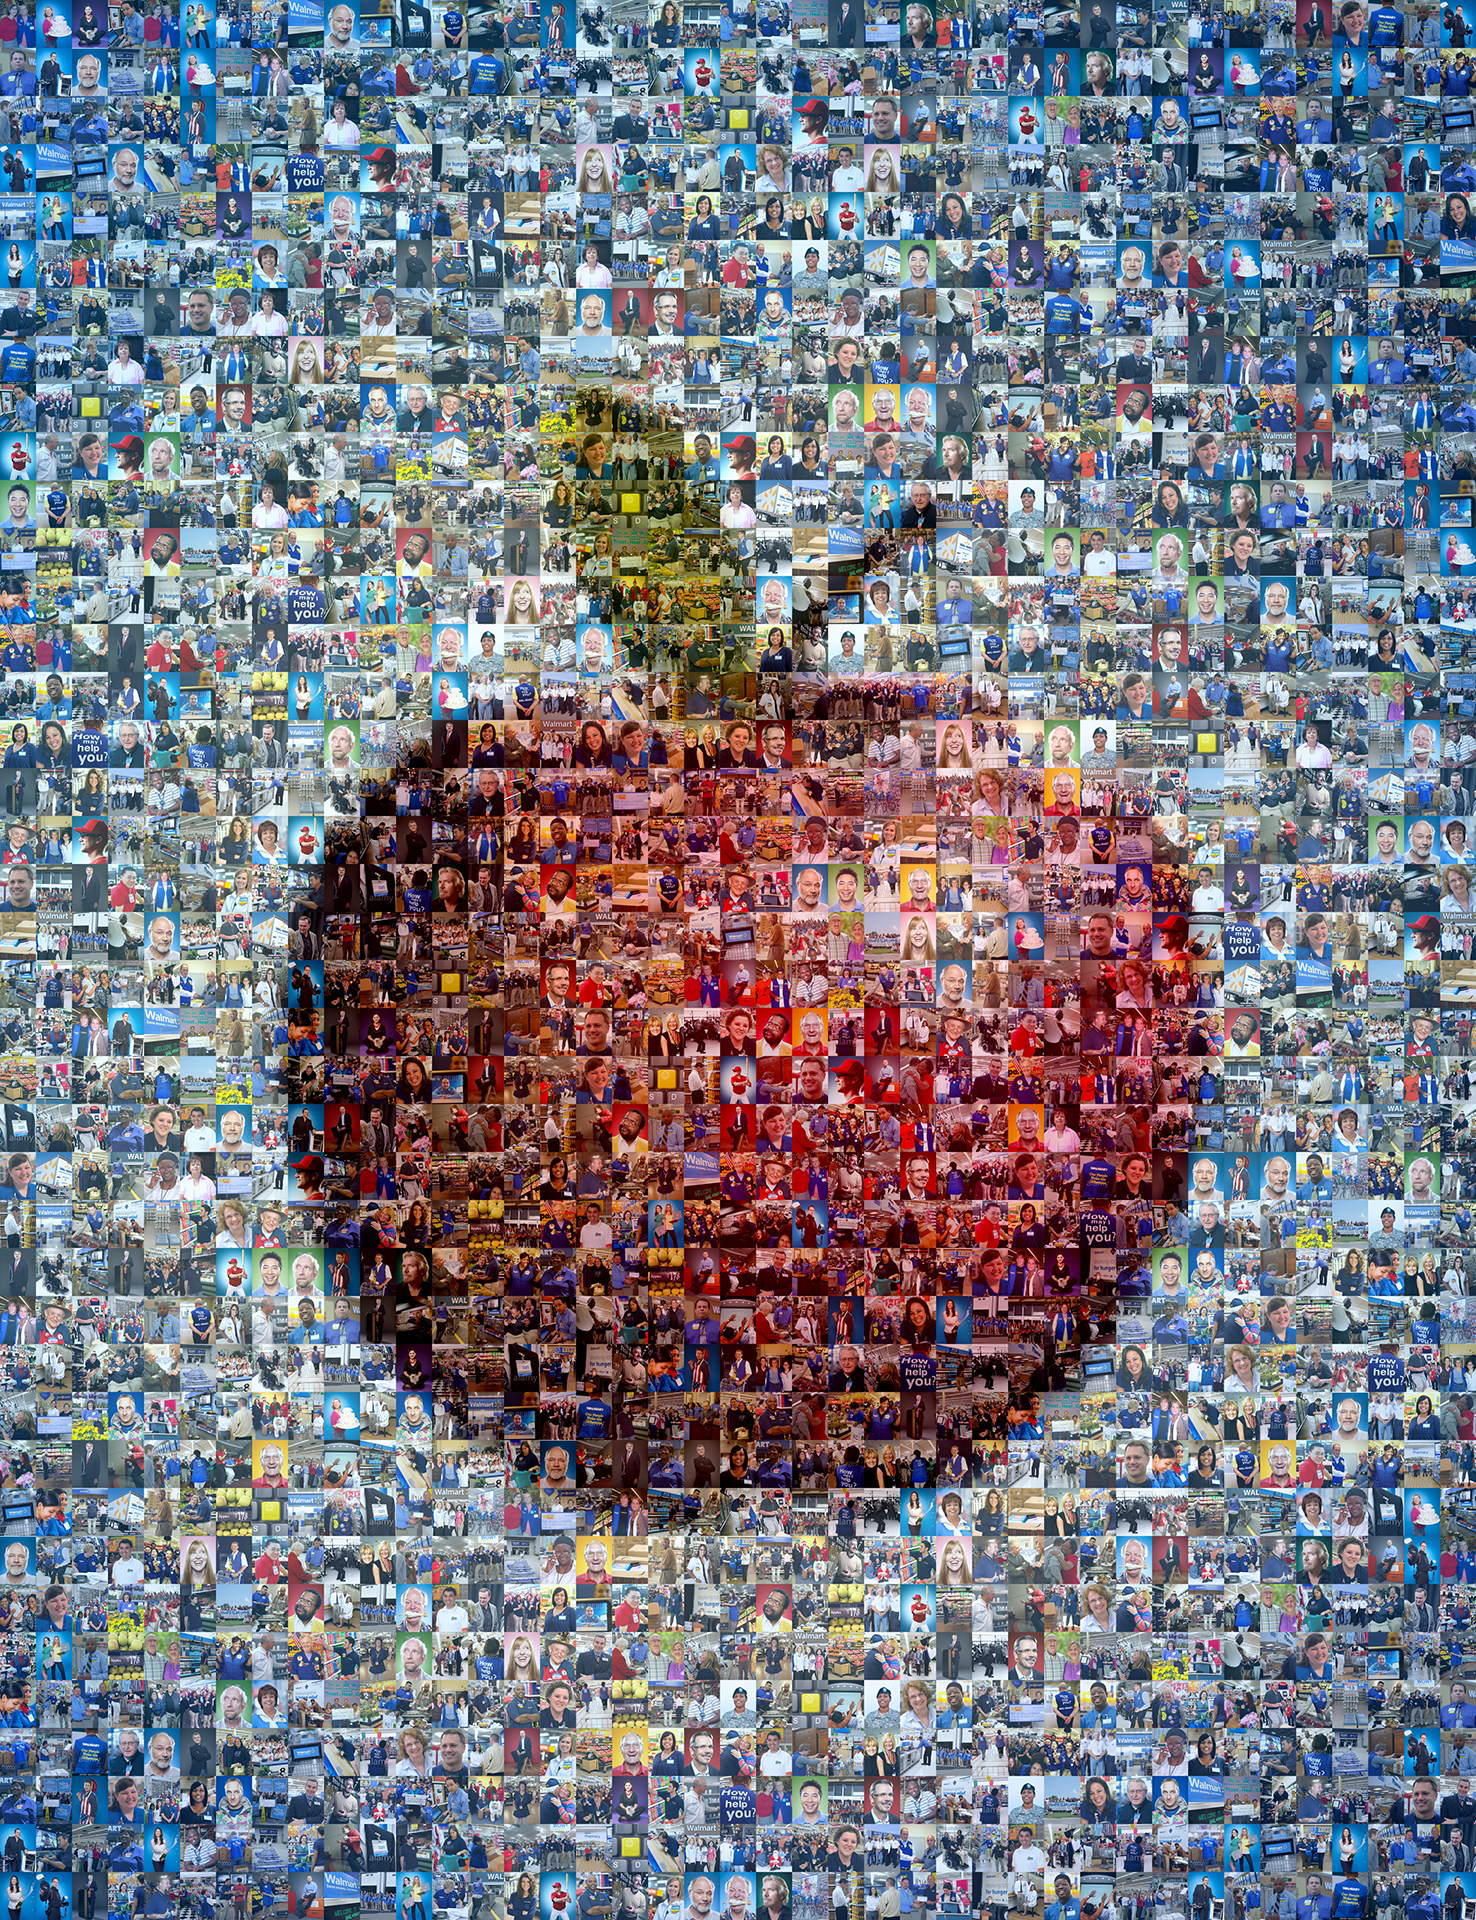 photo mosaic created using 181 corporate photos